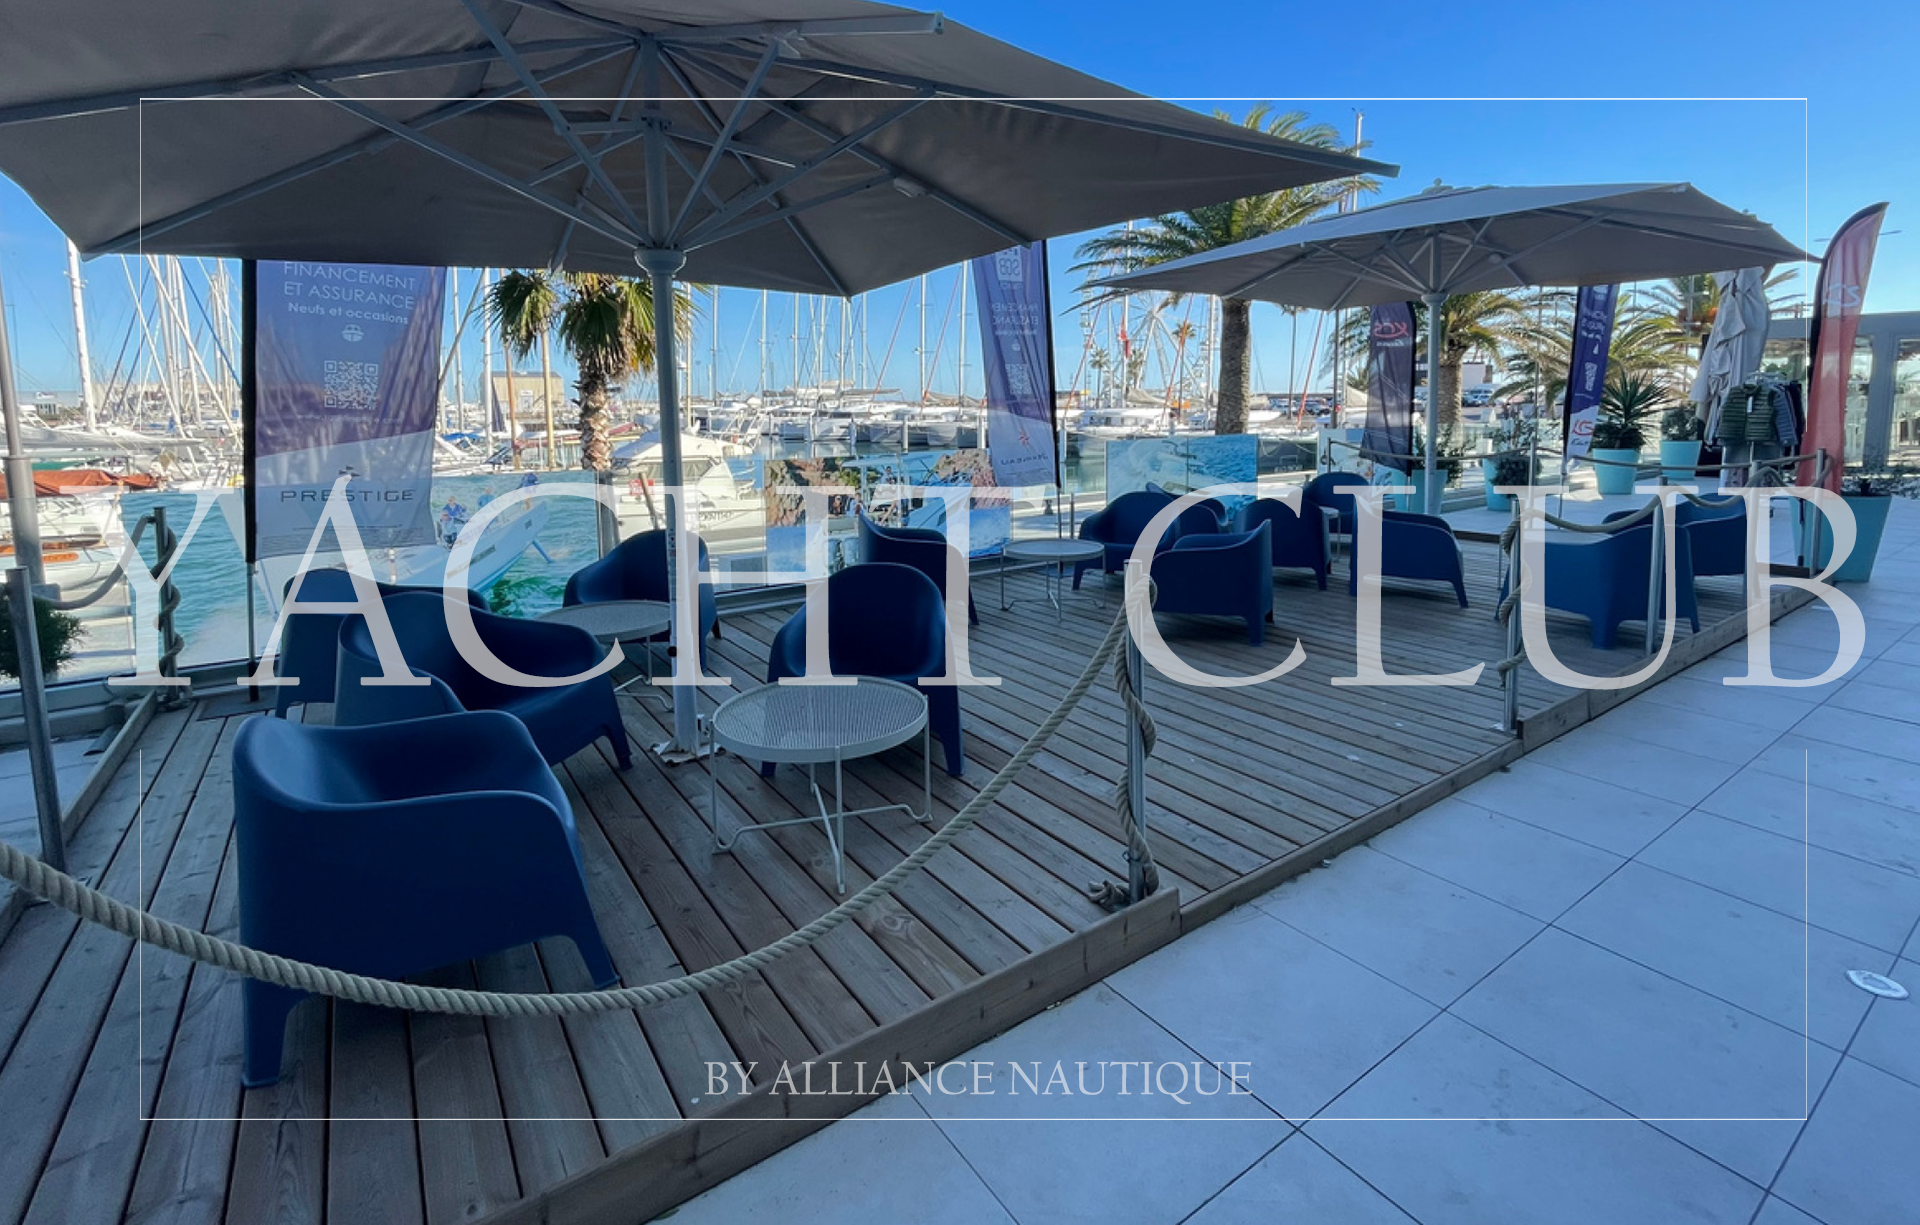 Yacht Club by Alliance Nautique